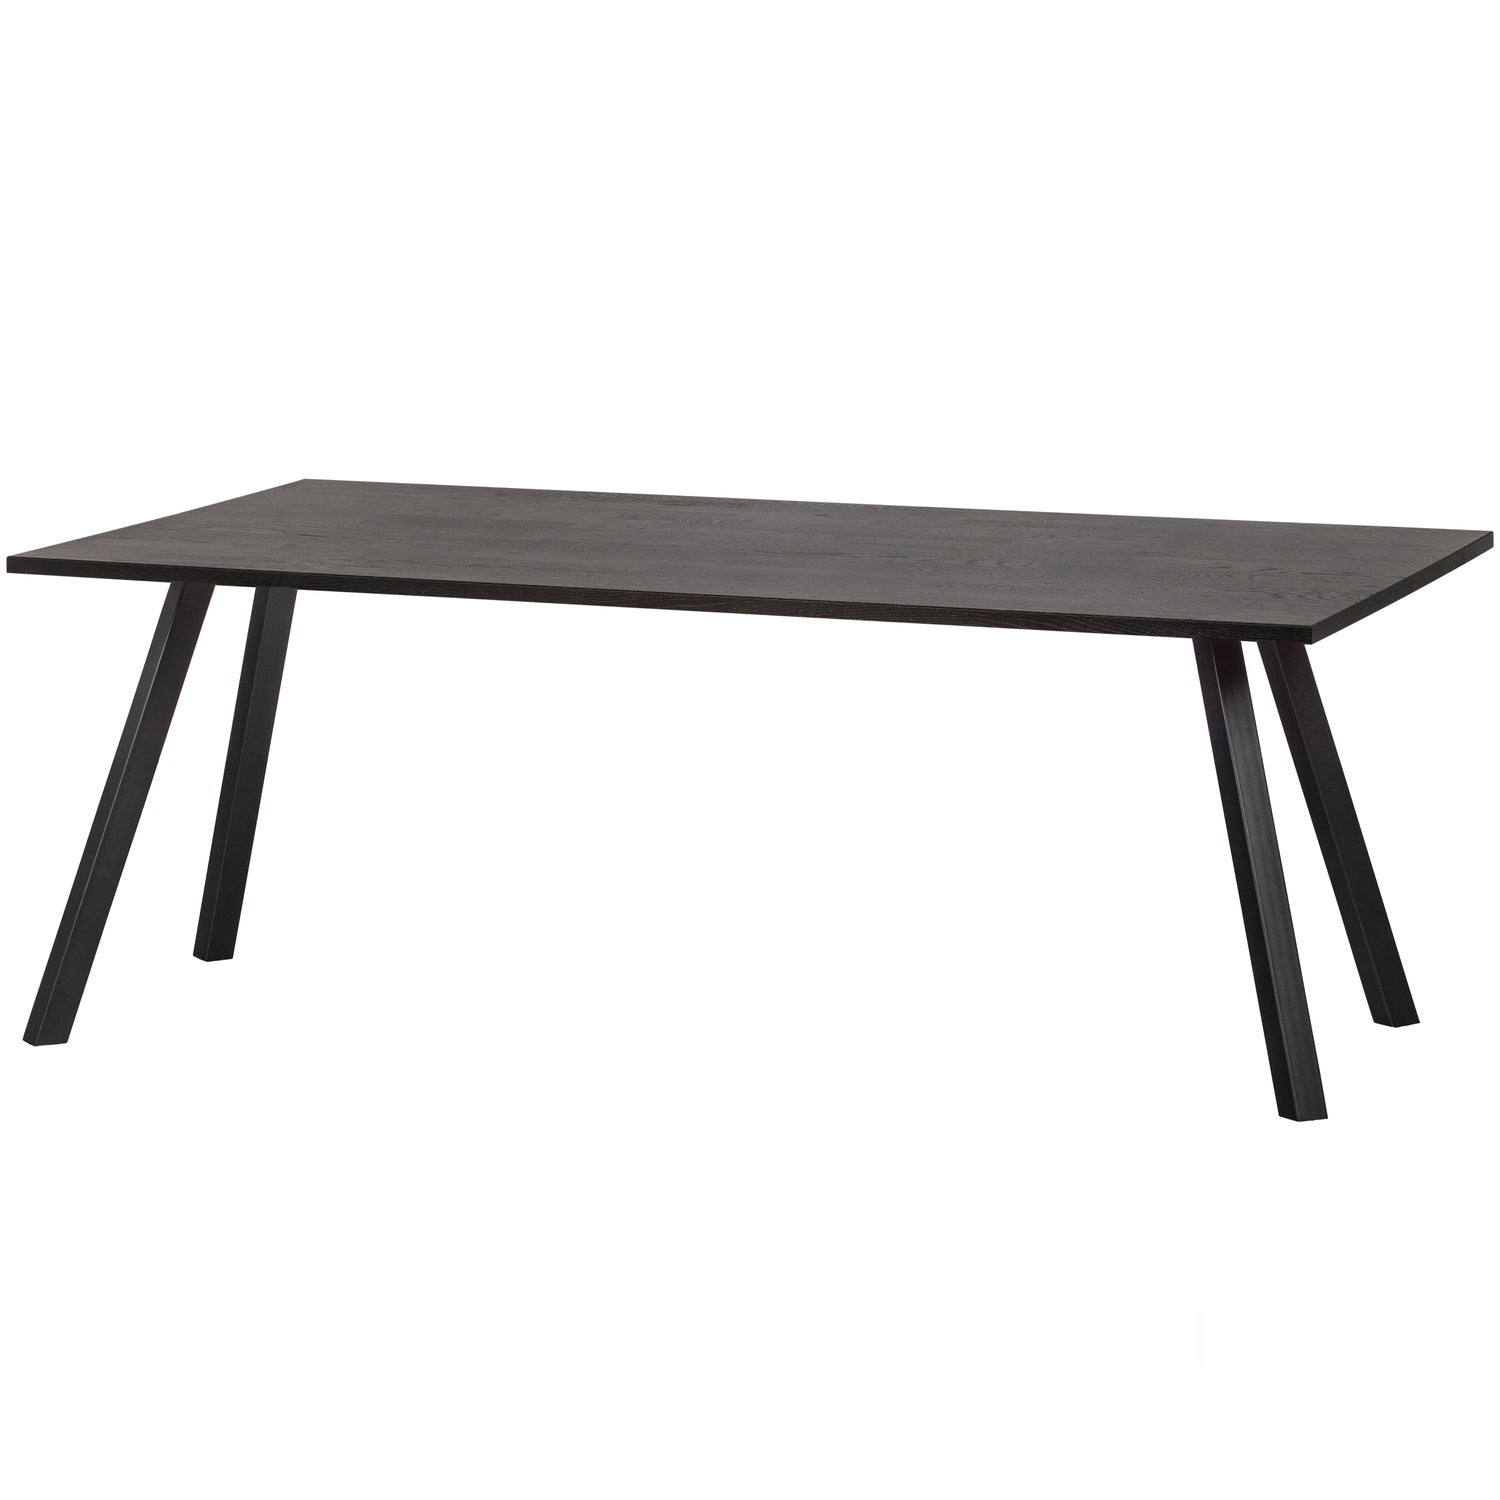 TABLO TABLE OAK BLACKNIGHT 160X90 [fsc] & SQUARE LEG